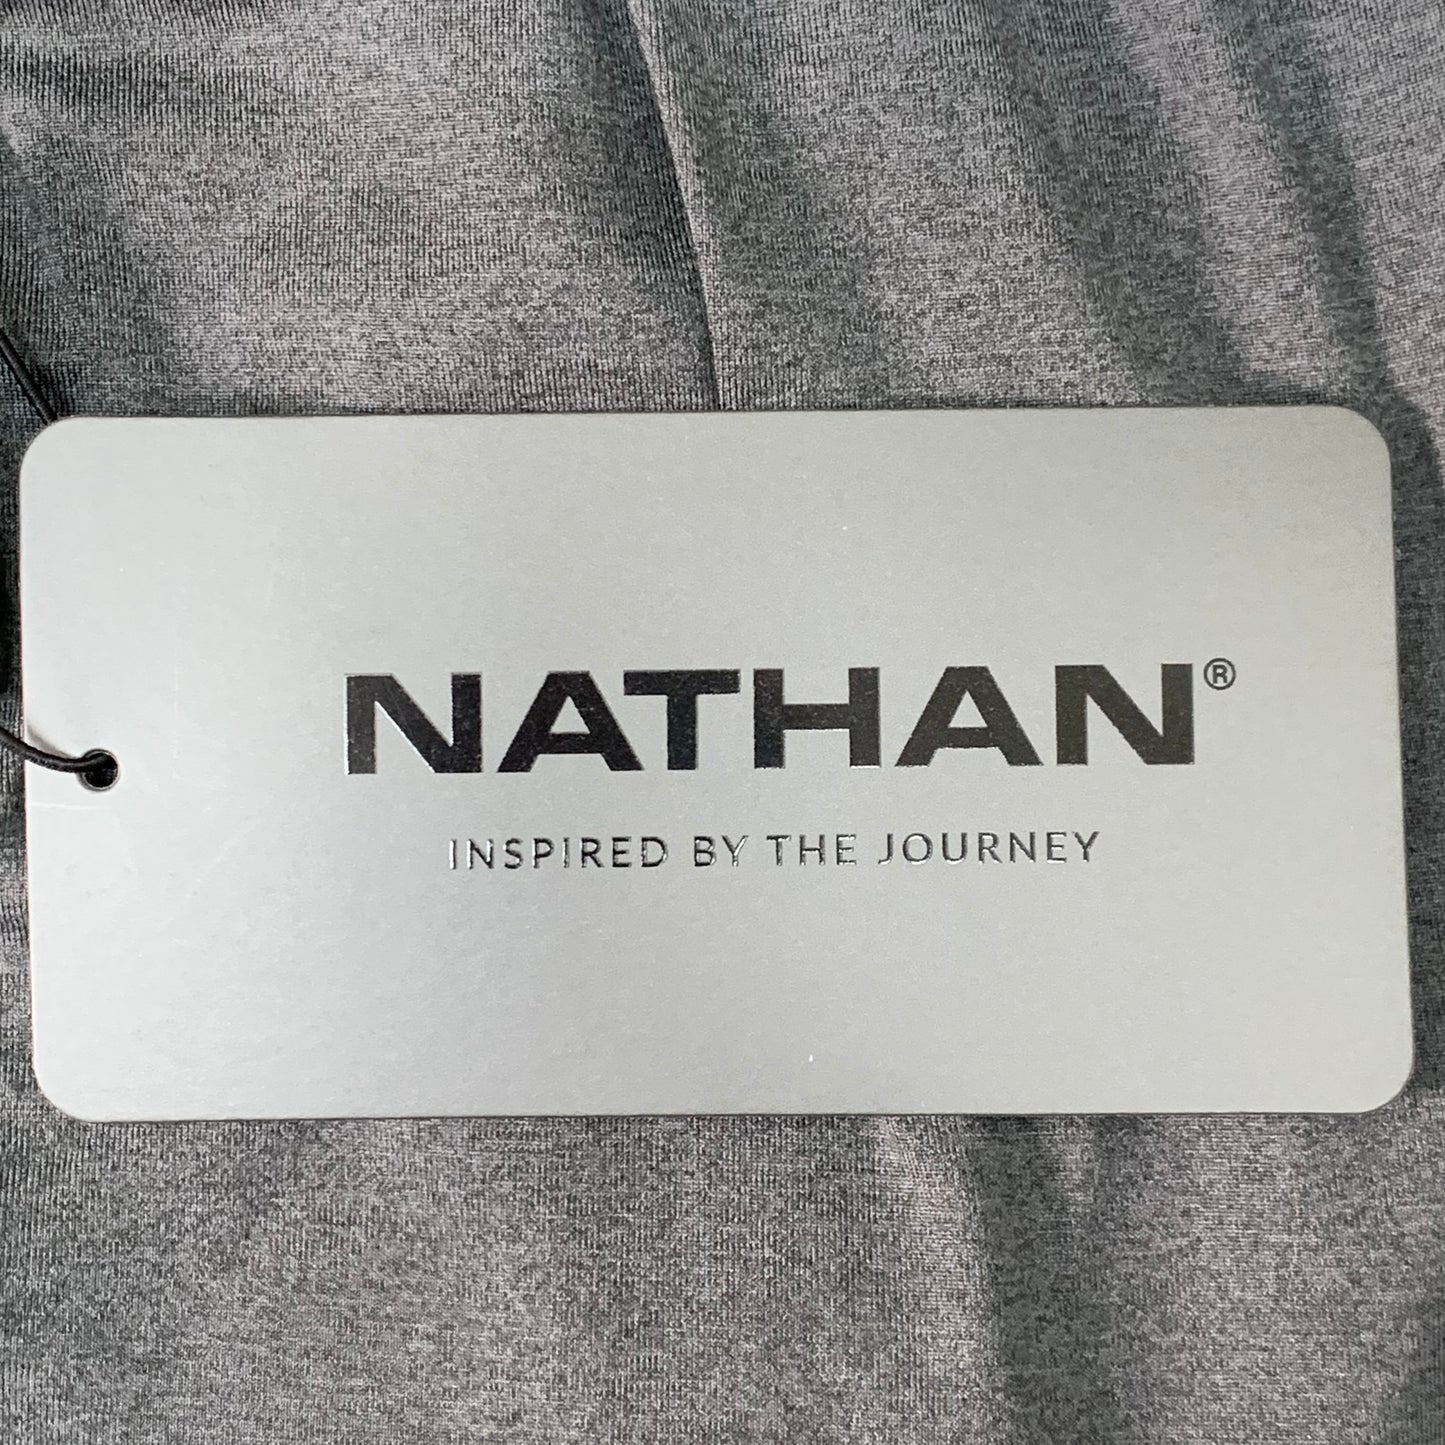 NATHAN 365 Jogger Pants Men's Sz S Dark Charcoal NS50620-80078-S (New)